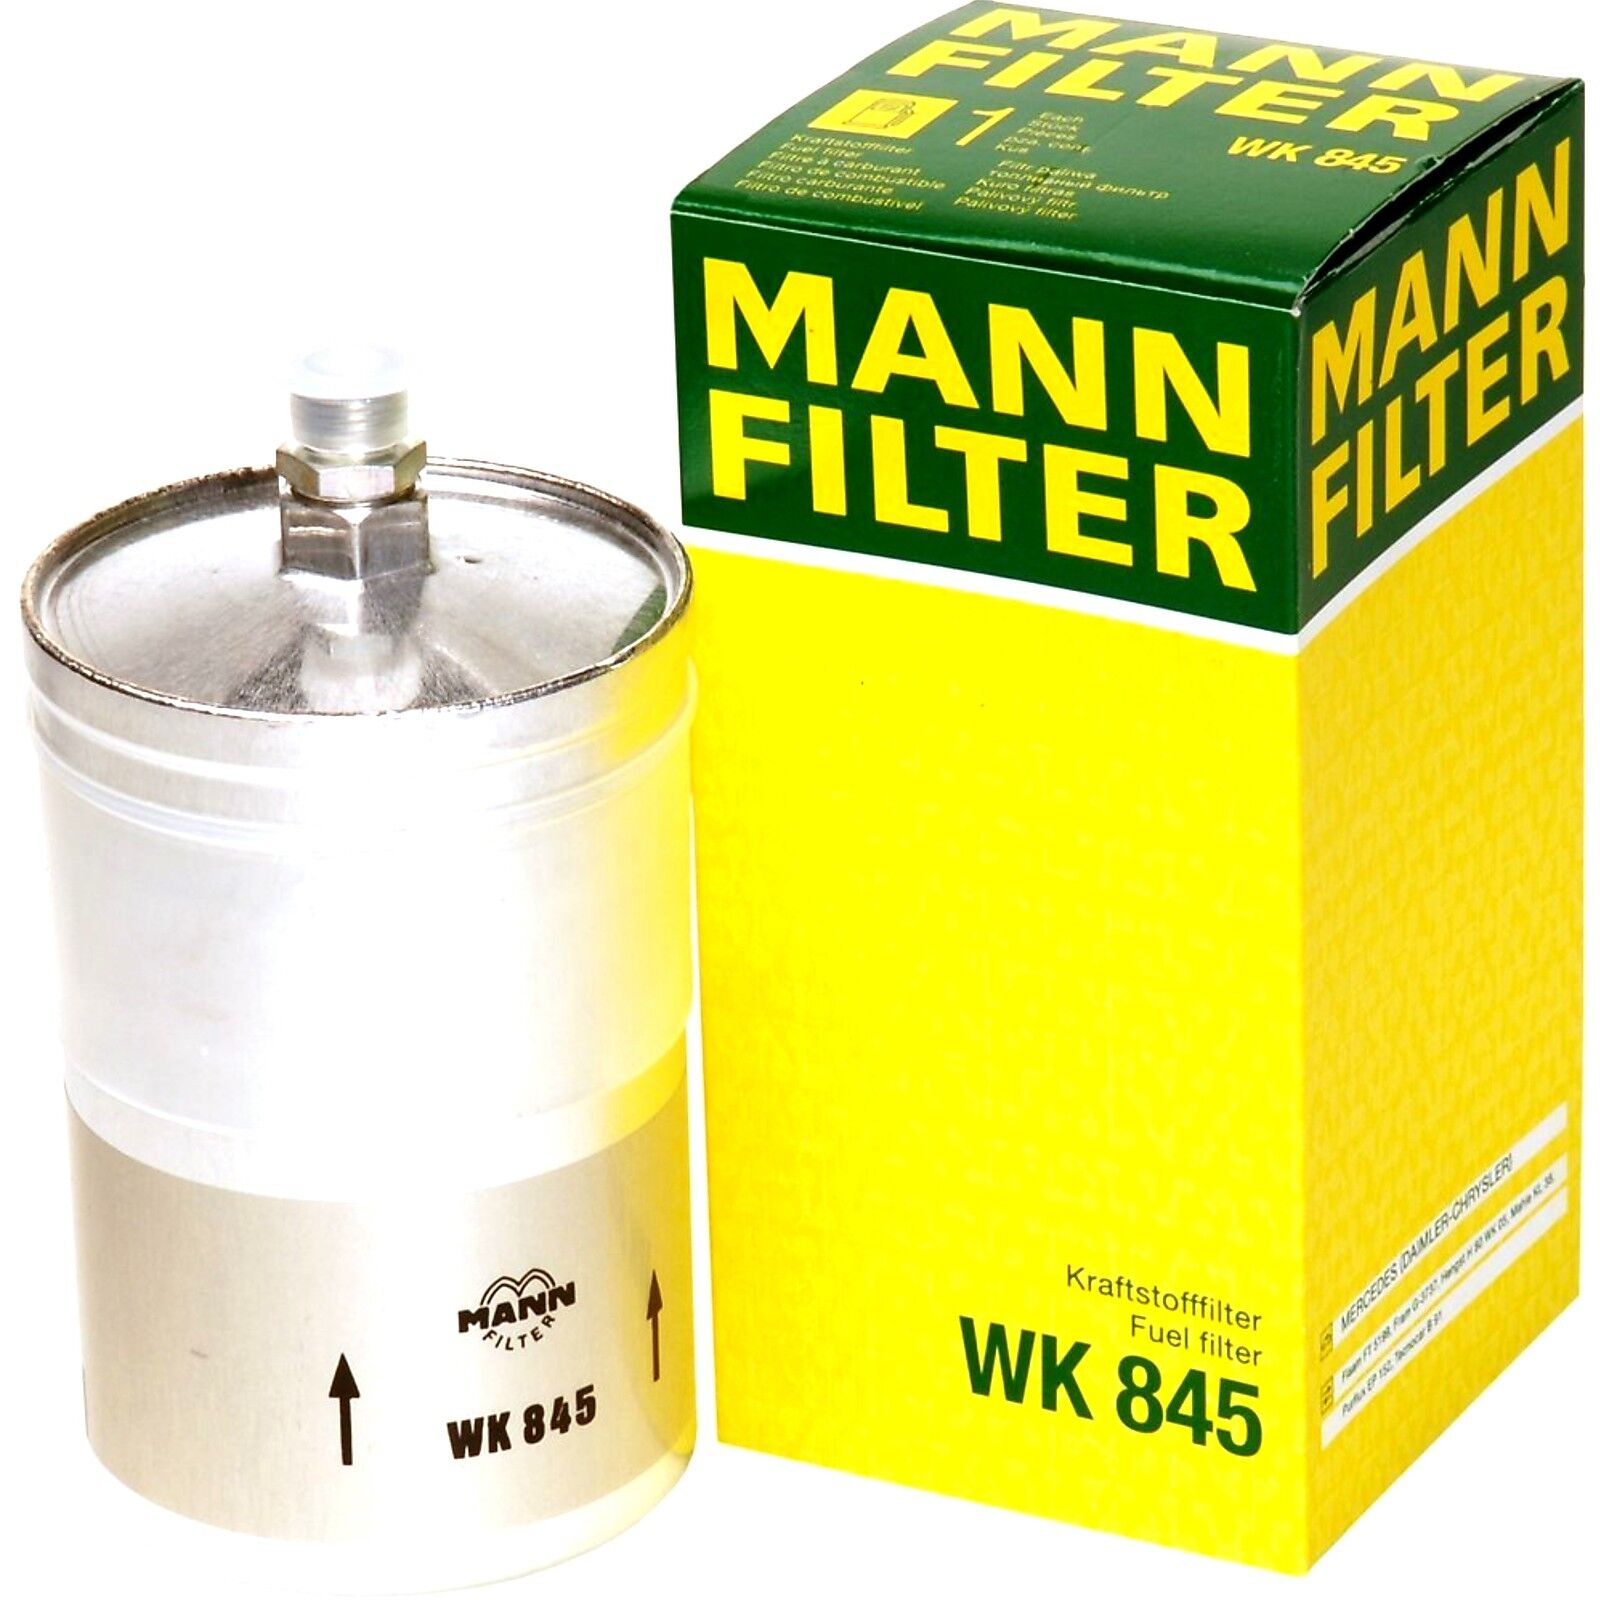 MANN WK 845 Fuel Filter